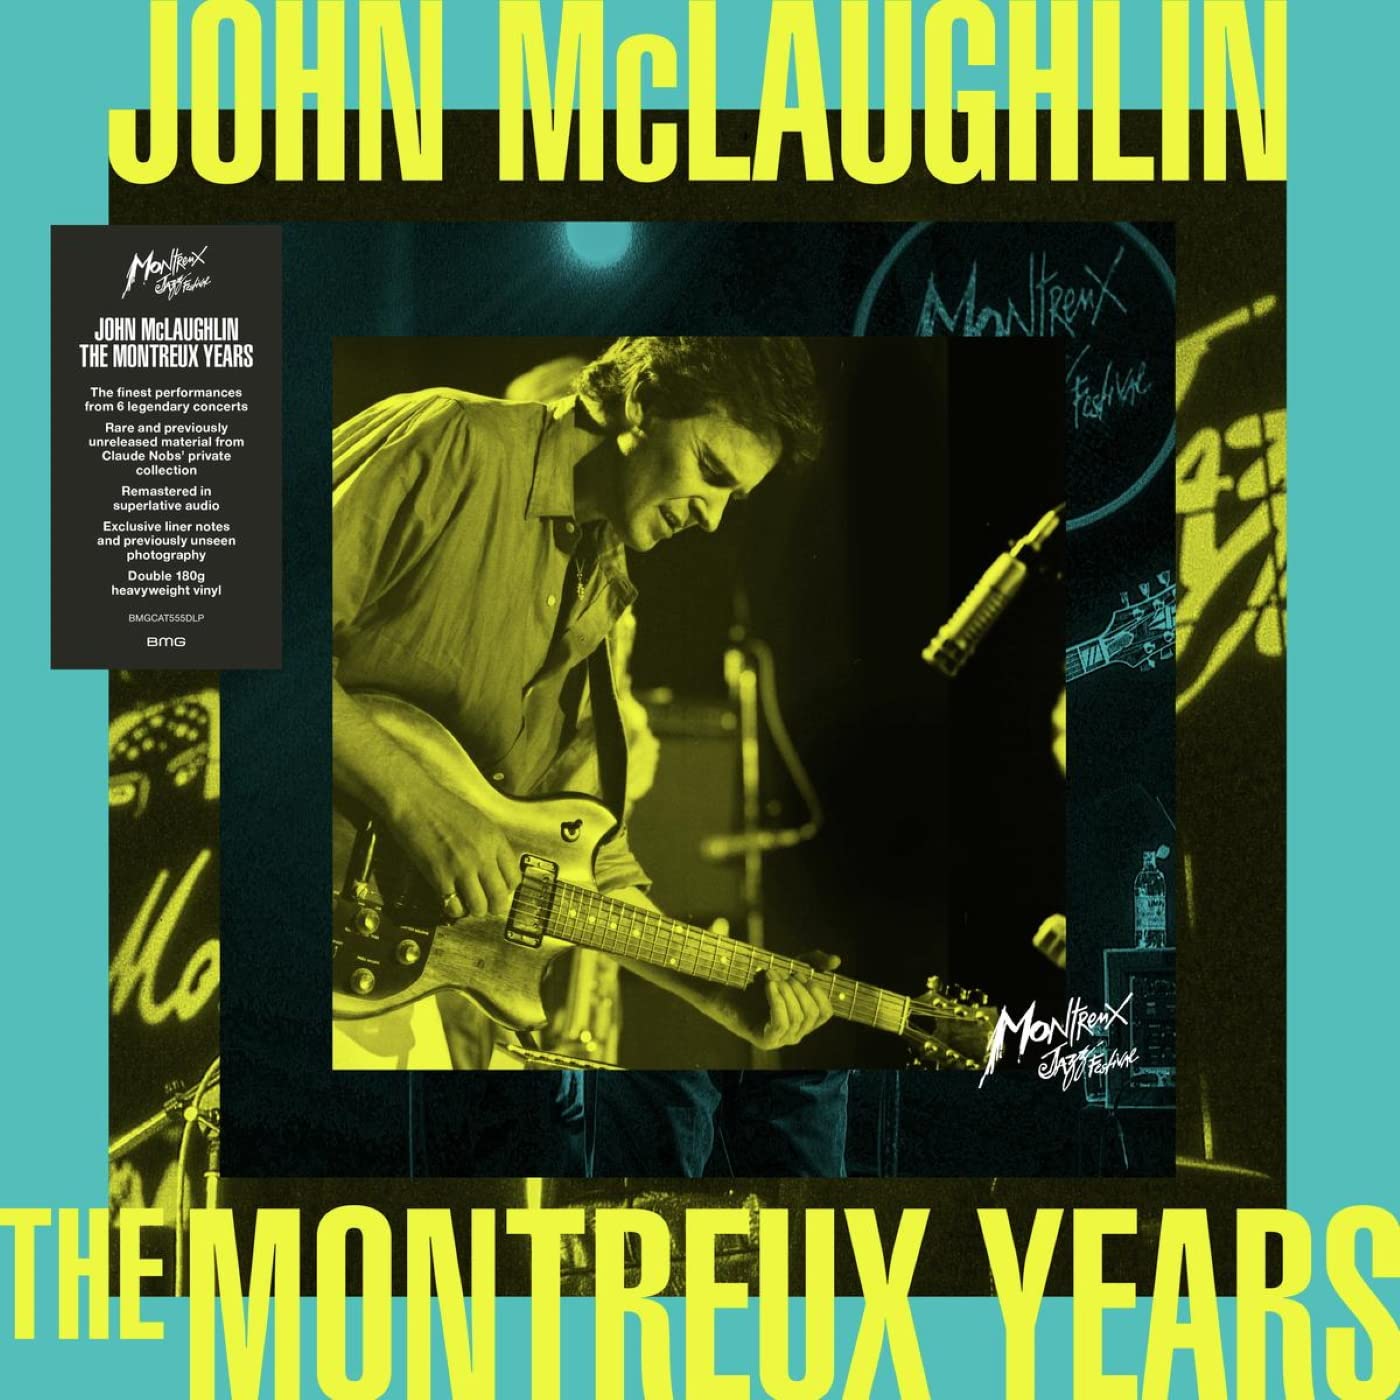 Montreux Years (Vinyl) - John McLaughlin